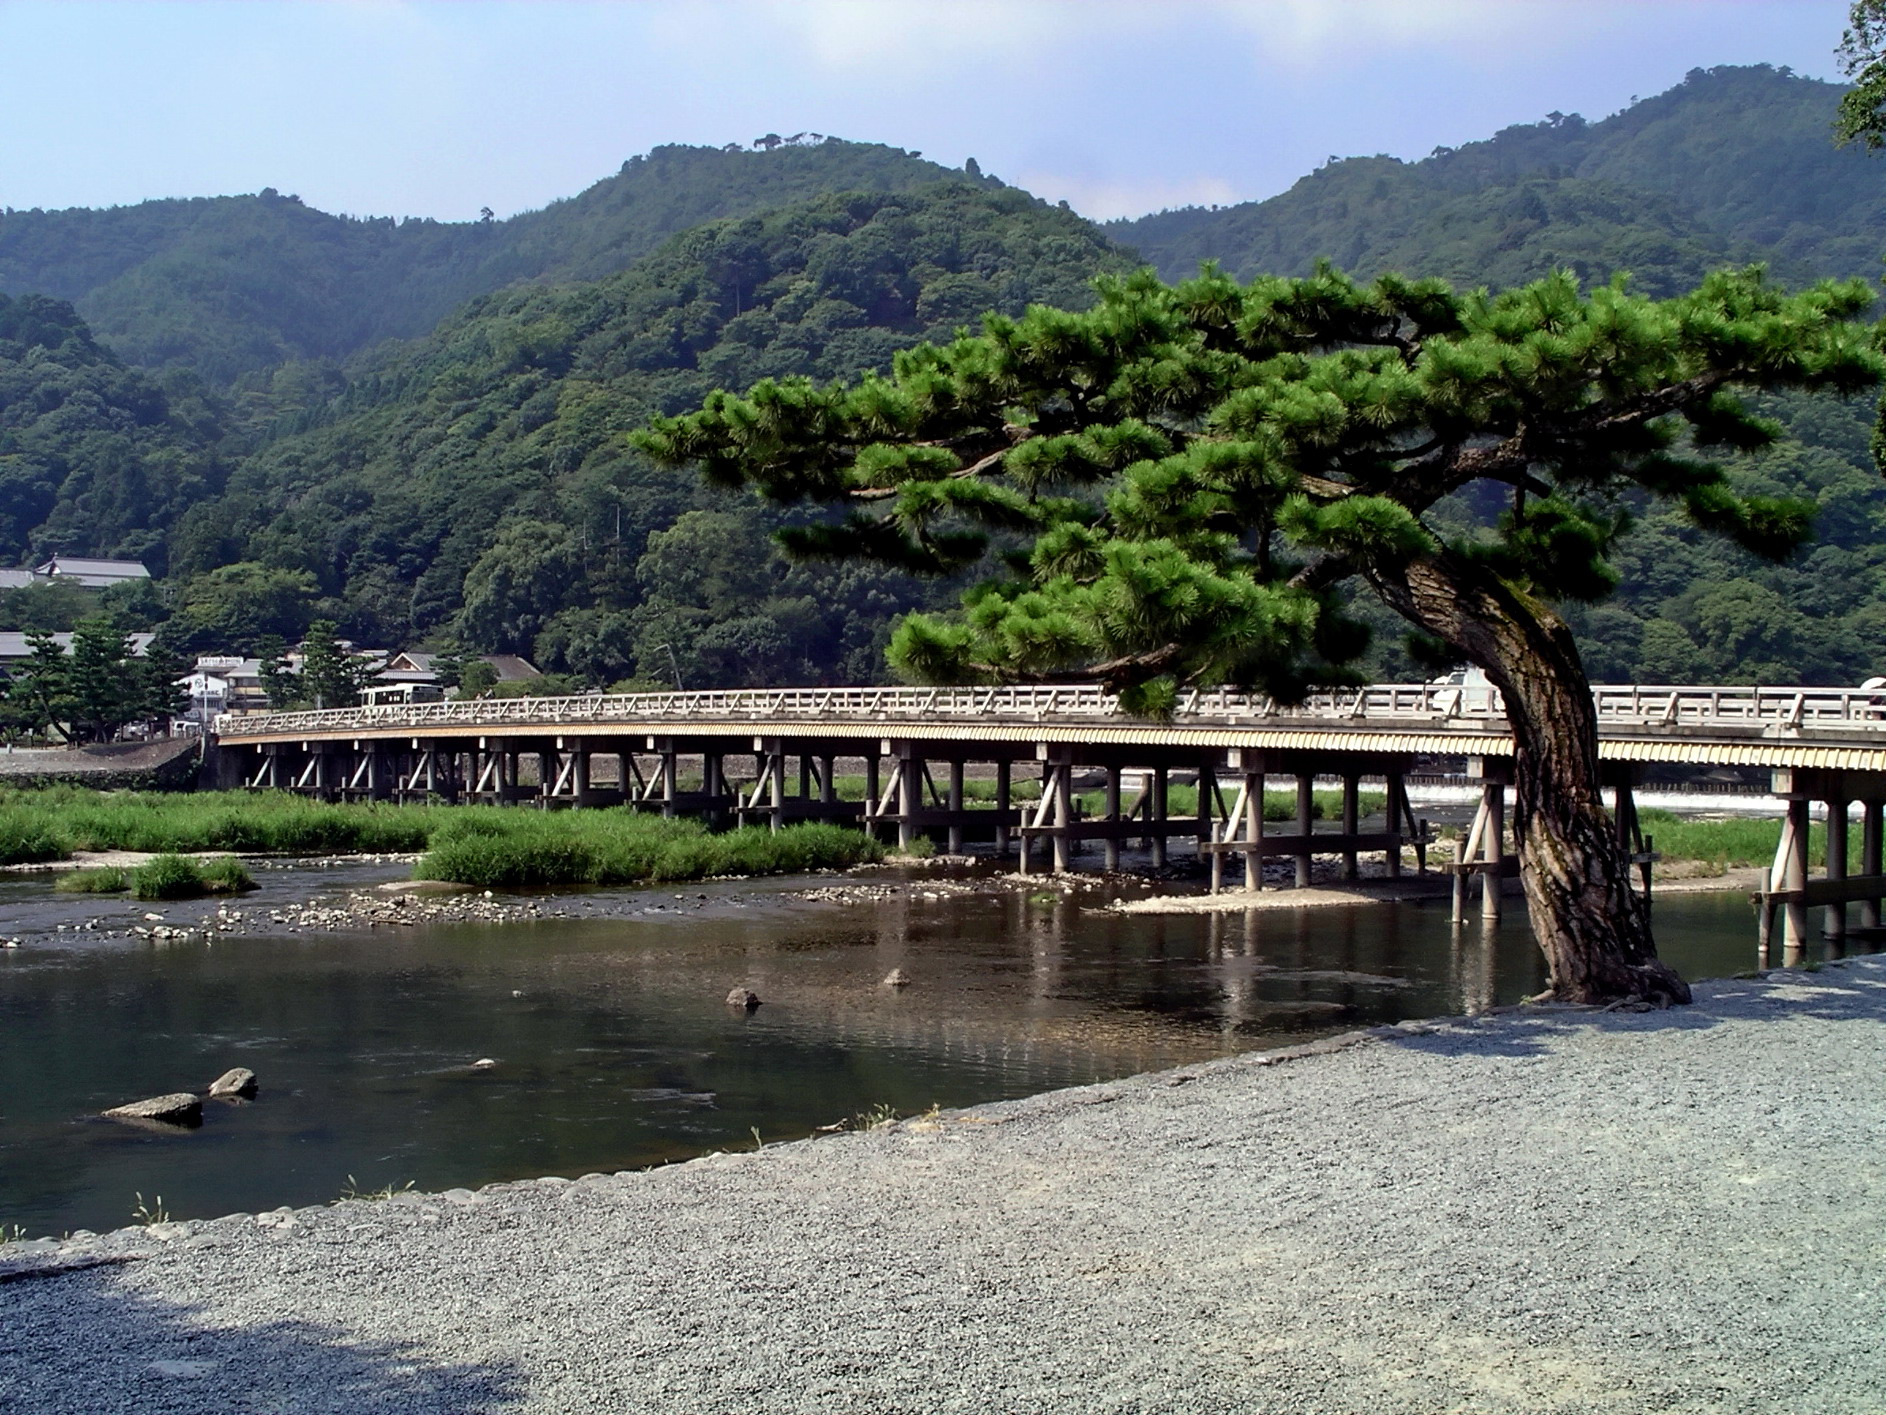 Togetsukyo in Kyoto Arashiyama.jpg